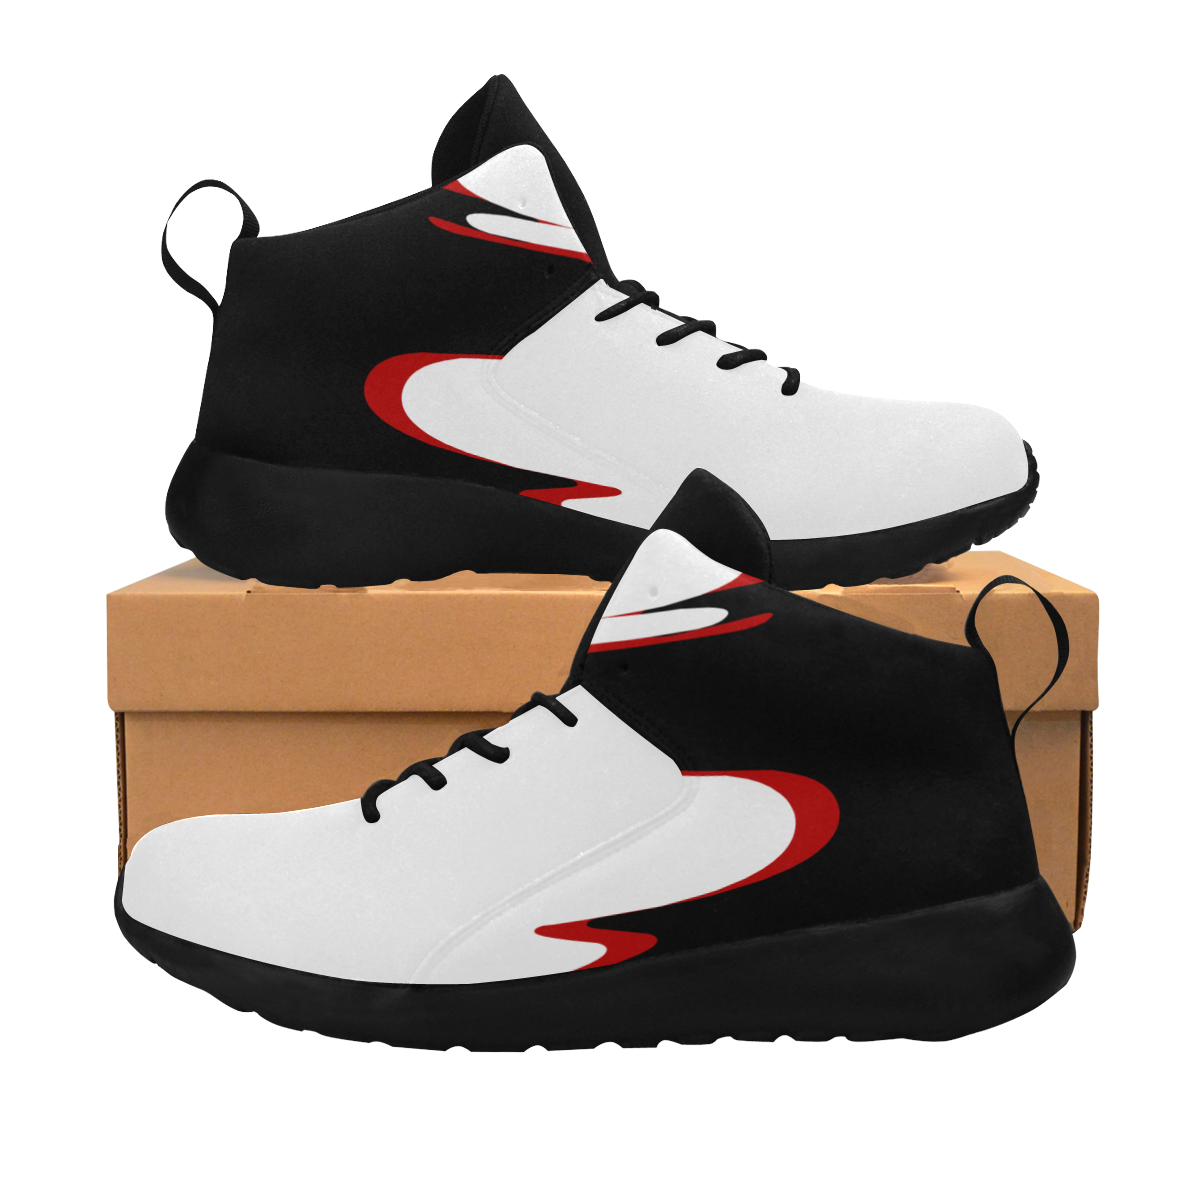 XD-VS Curve (Black/White/Red) Men's Chukka Training Shoes (Model 57502)